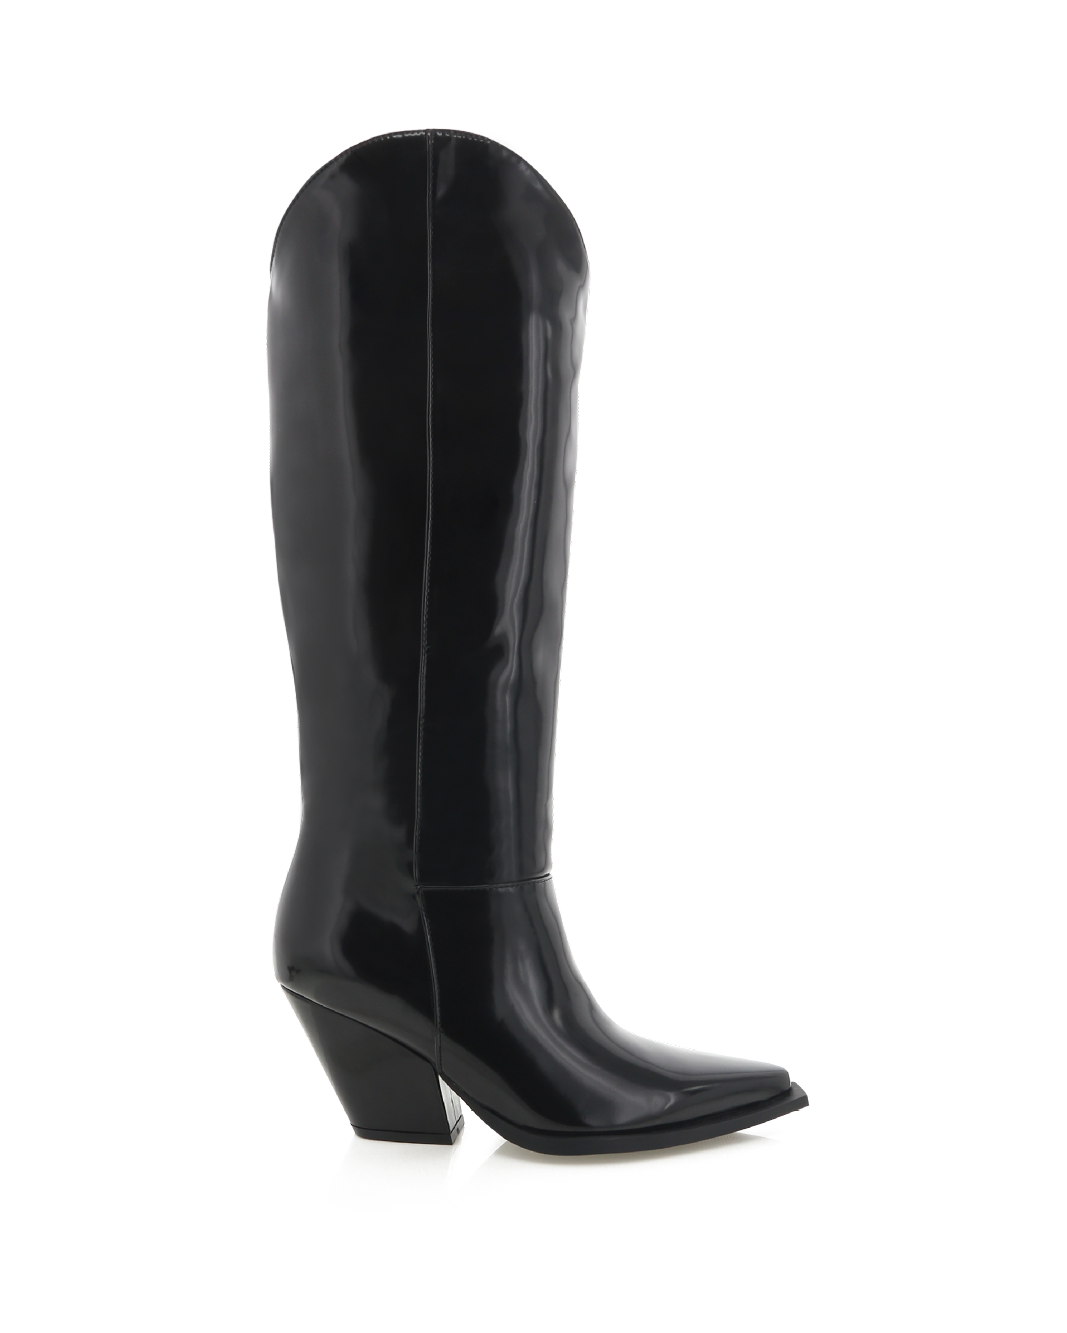 THE WESTERN - BLACK SEMI PATENT-Boots-Billini-Billini